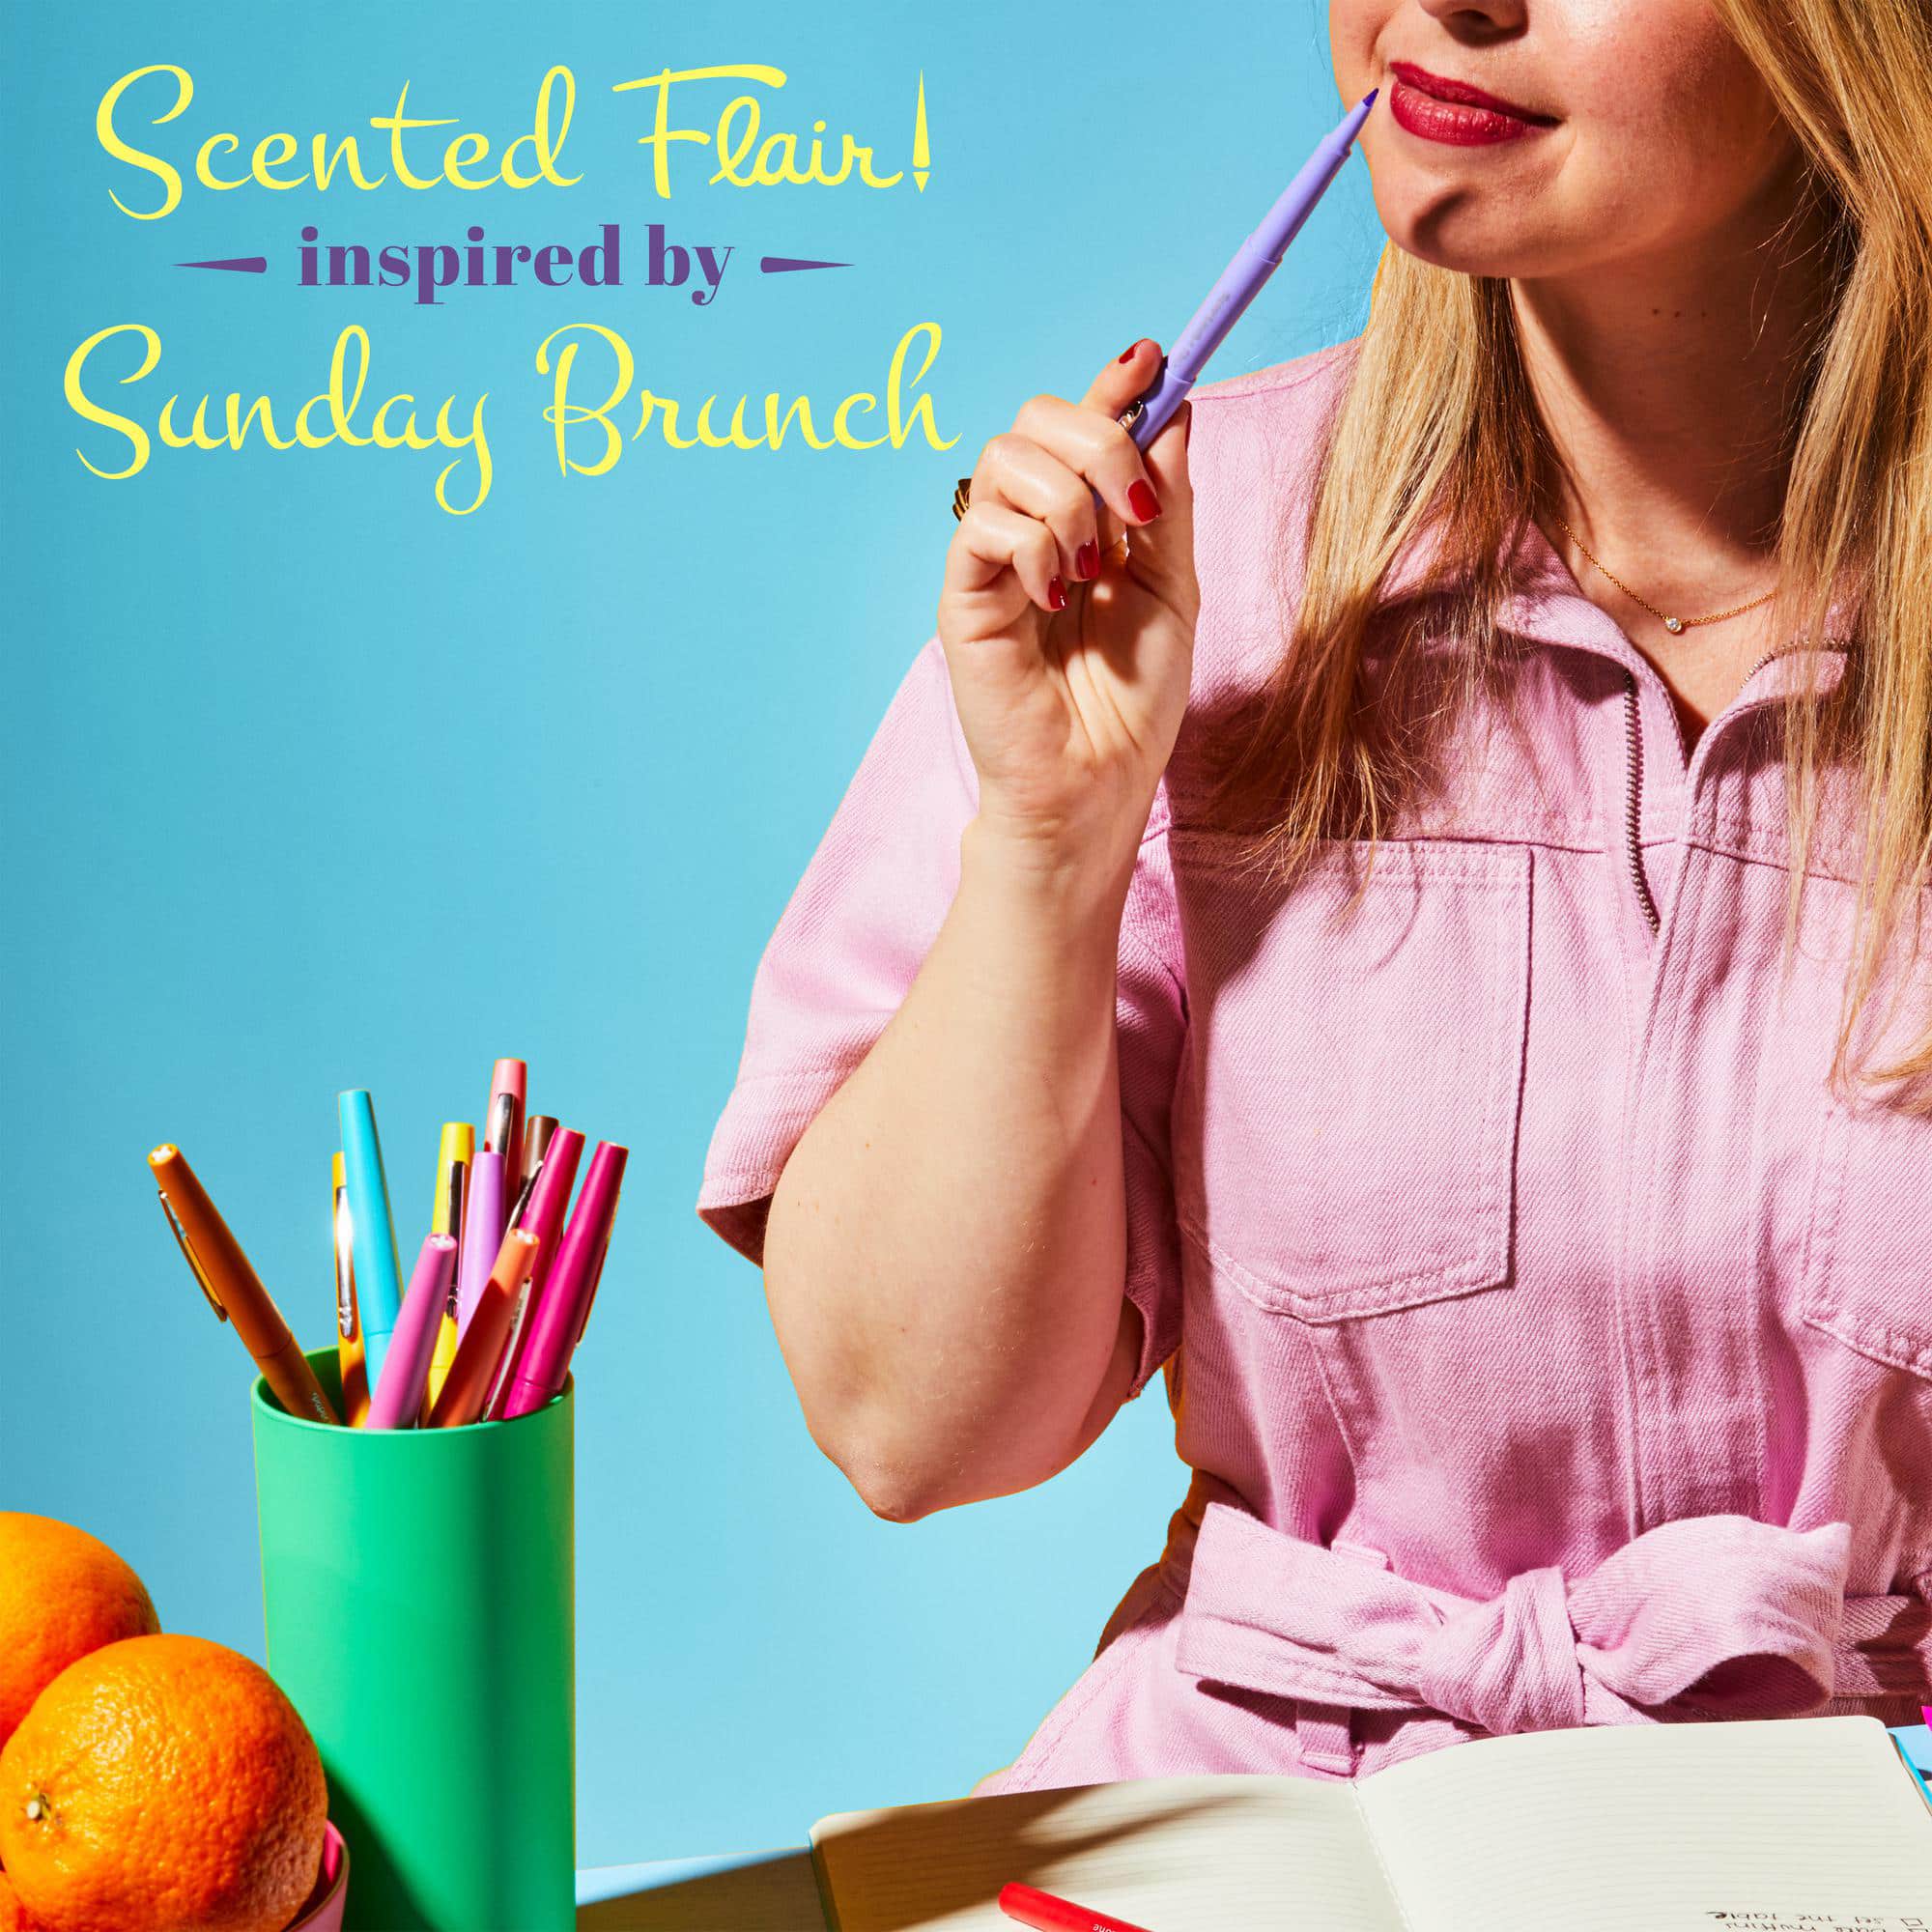 Paper Mate&#xAE; Flair!&#xAE; Scented Sunday Brunch&#x2122; Felt Tip Pen Set